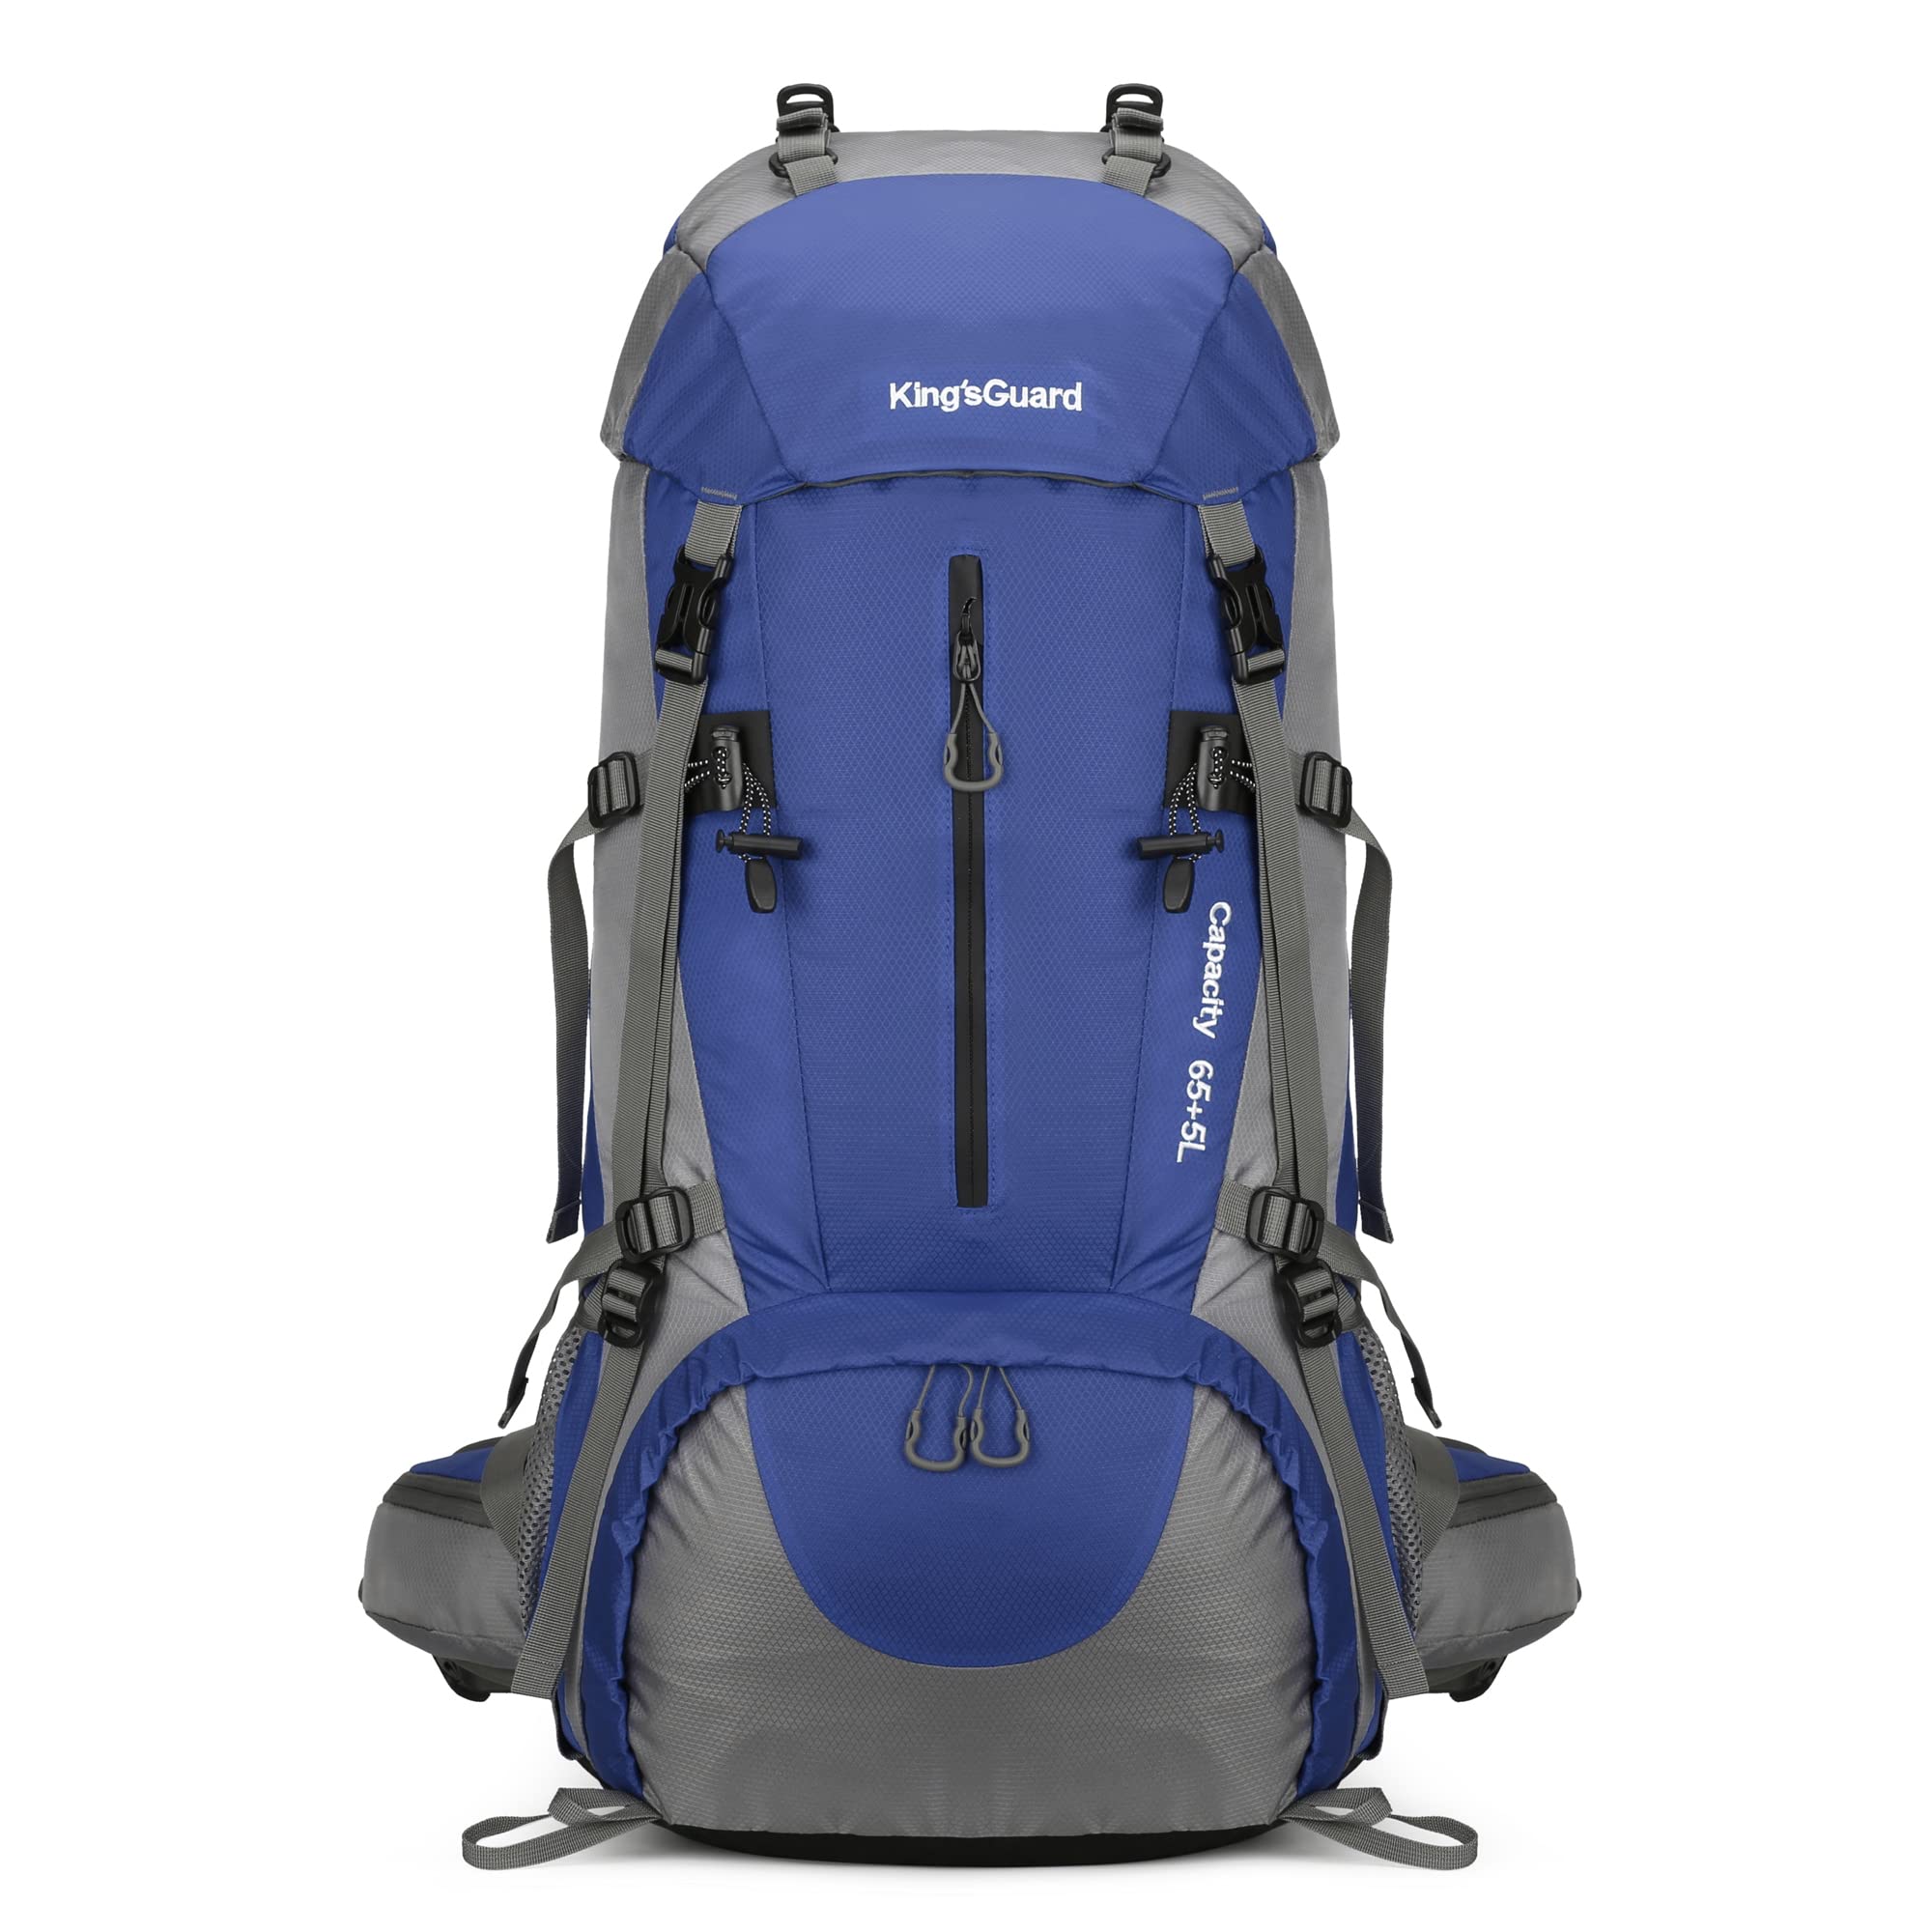 HongXingHai 70L Camping Hiking Backpack with Rain Cover Waterproof Backpacking Backpack for Hiking Treeking Climbing Outdoor (DeepBlue)